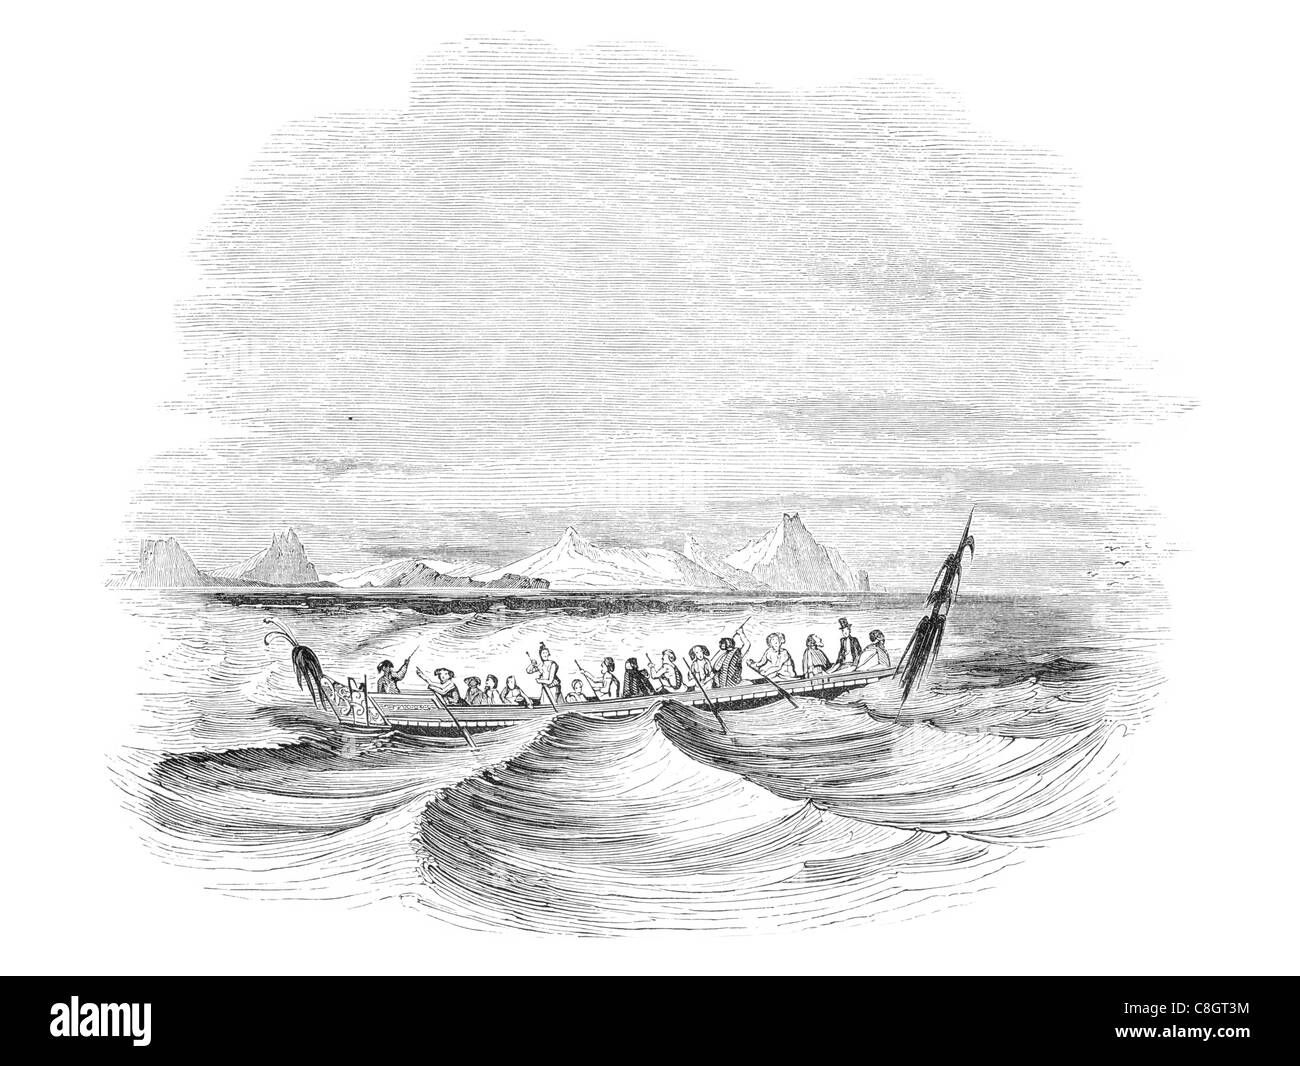 Cape Wangari Nuova Zelanda tradizione Māori Kurahaupō canoe kayak paddle pagaie remi marinaio scafo nave navi da guerra di spedizione marine Foto Stock